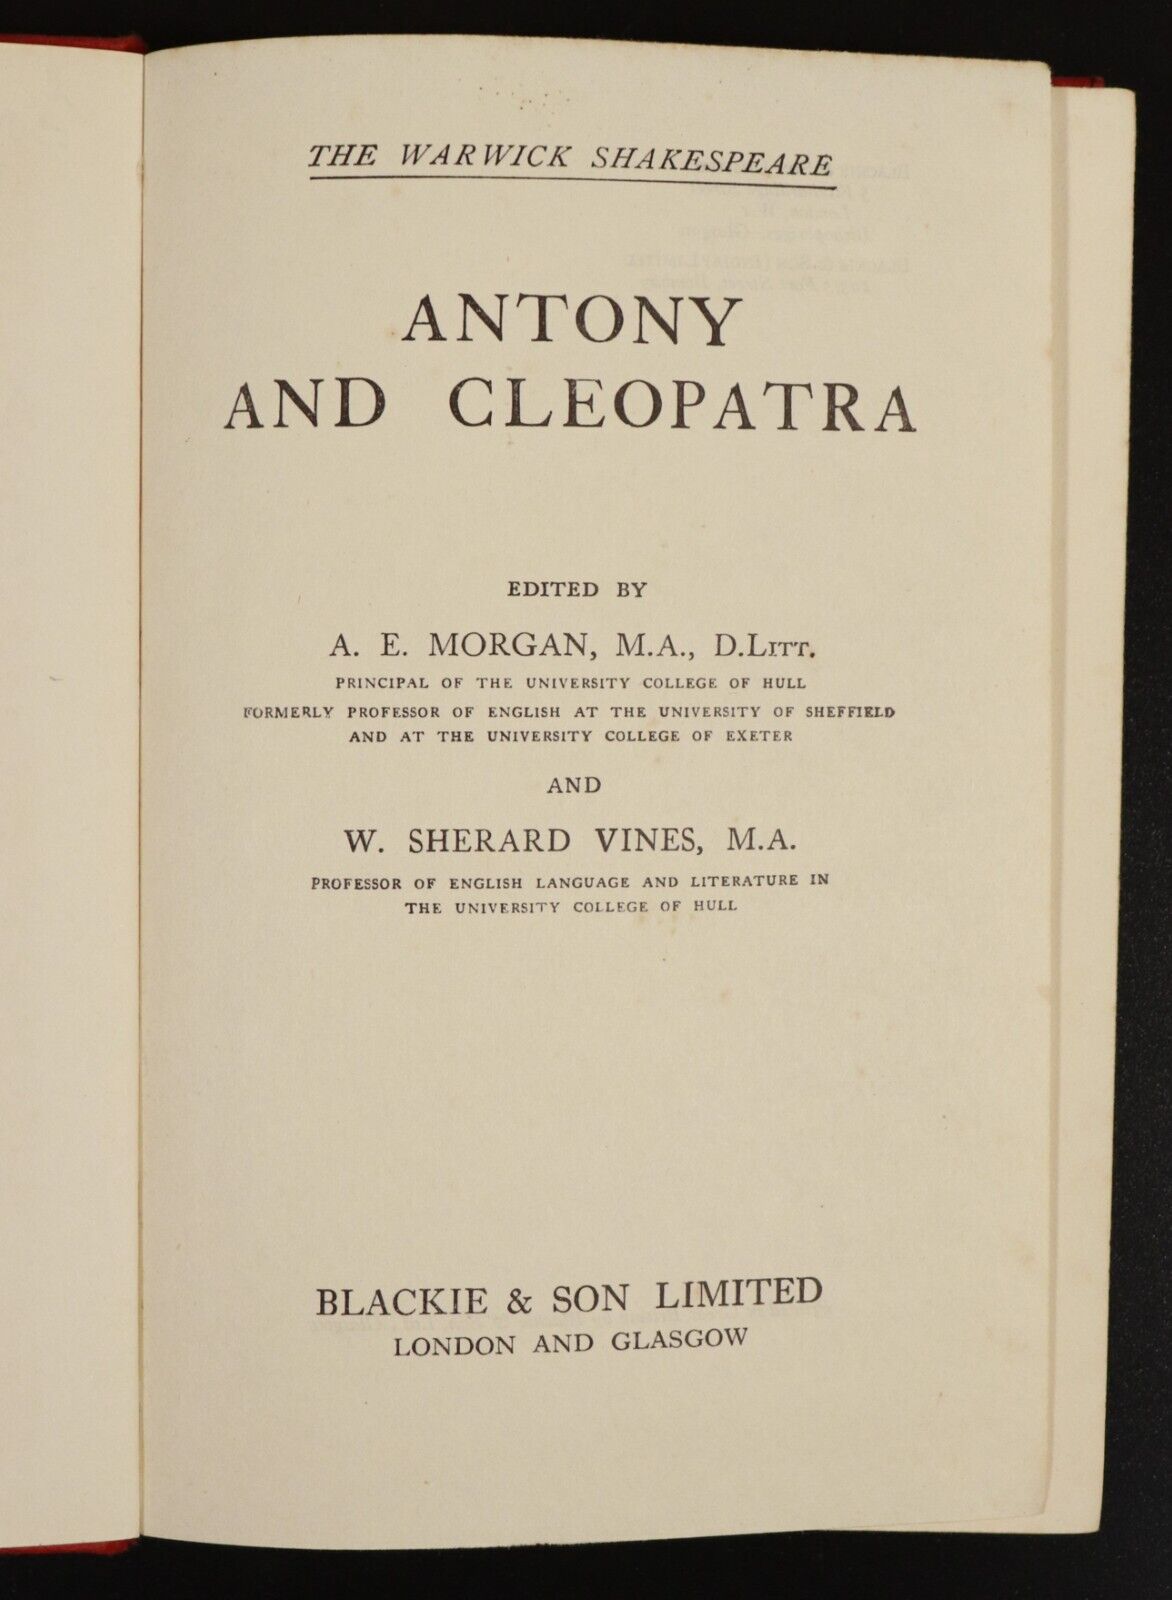 c1930 The Warwick Shakespeare: Antony & Cleopatra Antique Literature Book - 0